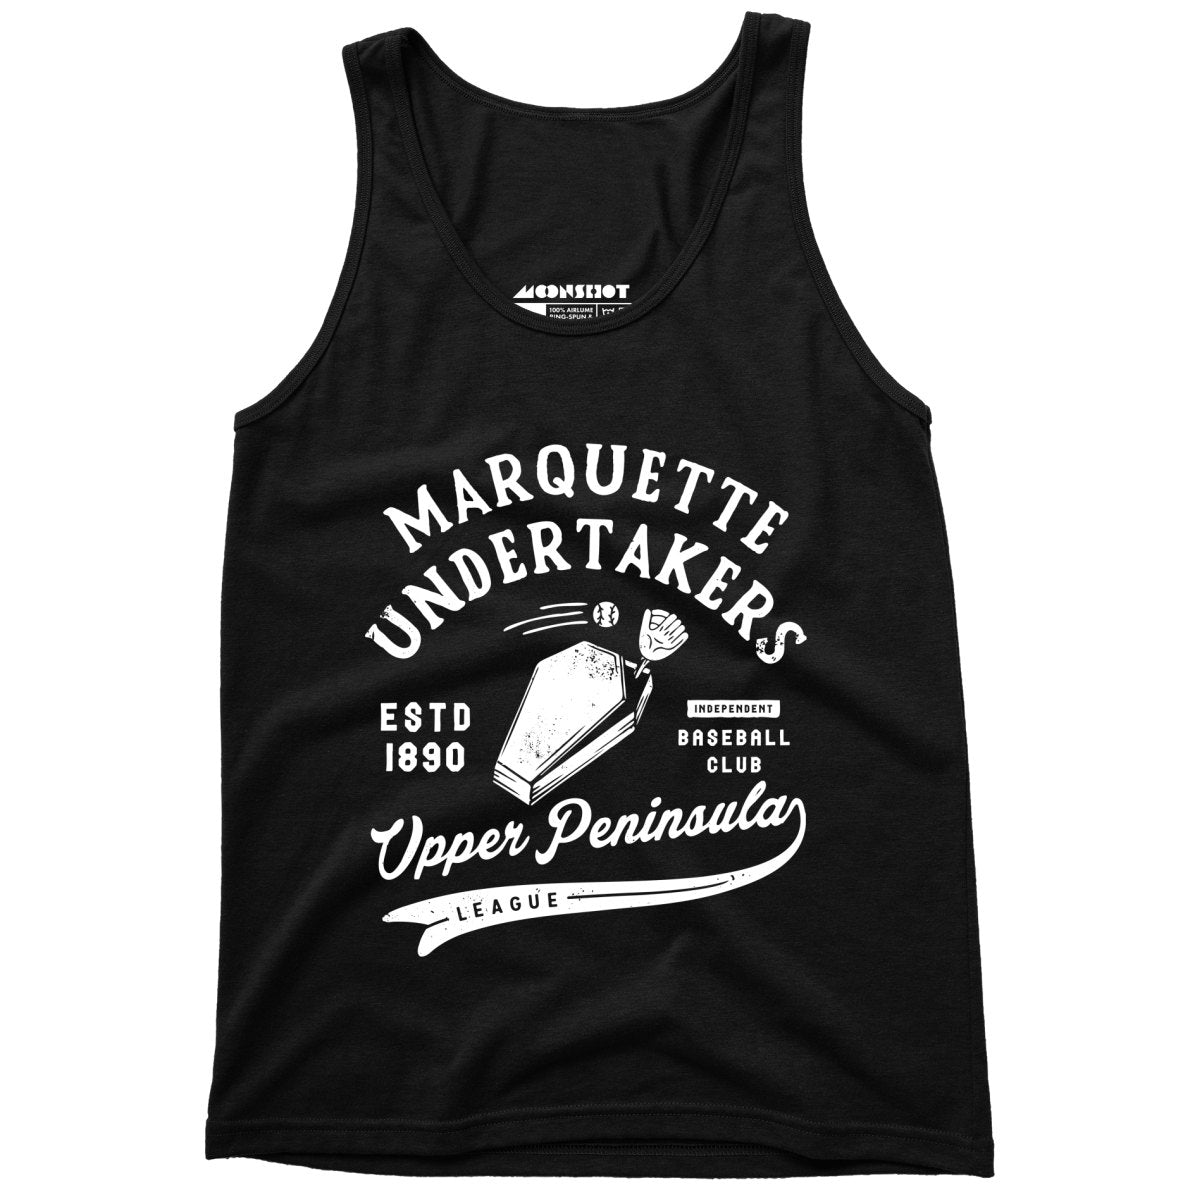 Marquette Undertakers - Michigan - Vintage Defunct Baseball Teams - Unisex Tank Top